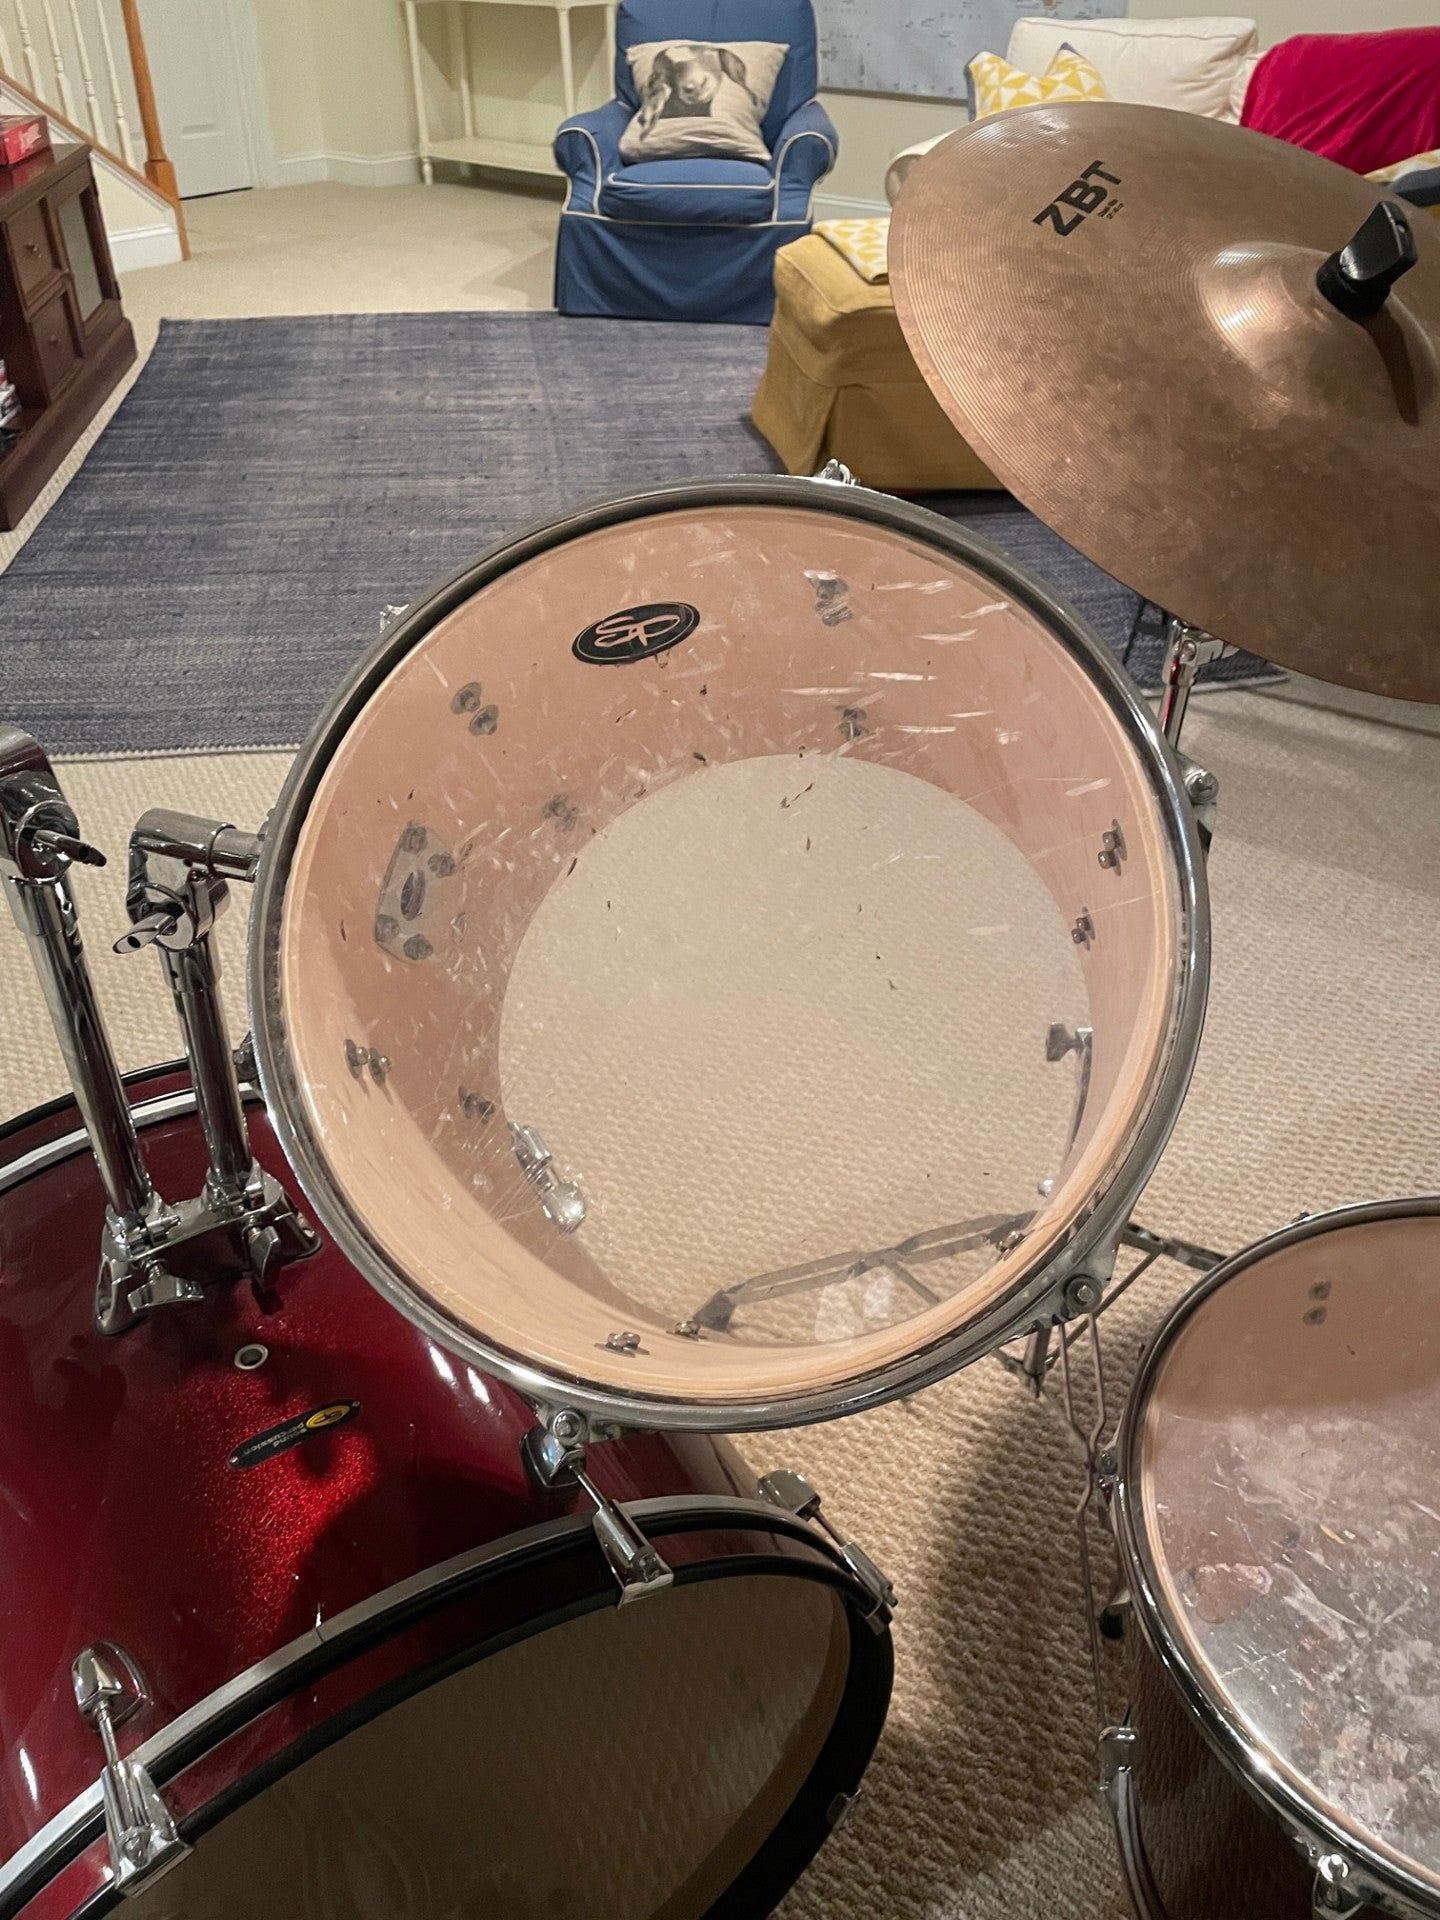 Sound Percussion SP Drum Set w ZBT Zildjian Cymbals AF215-1